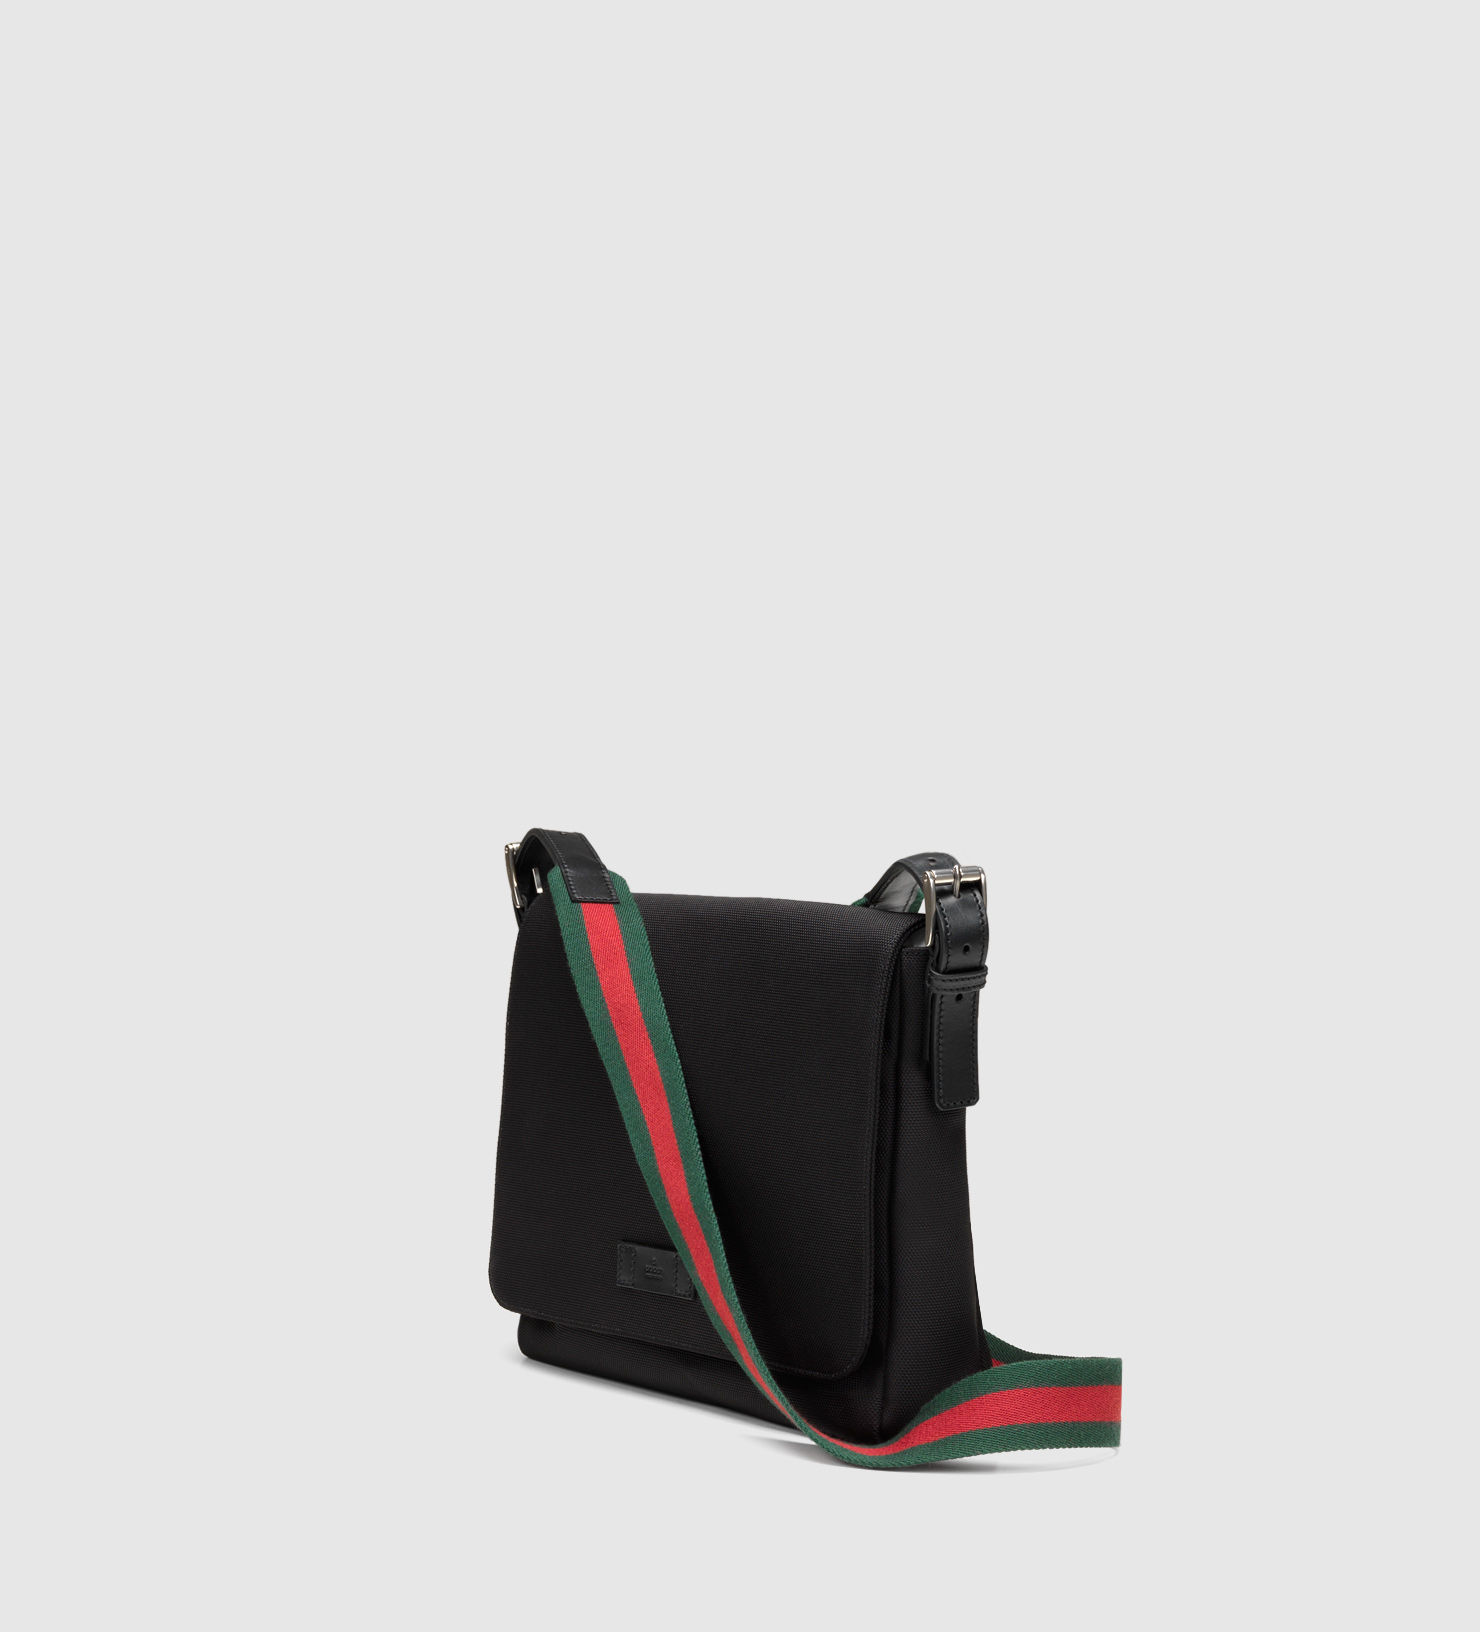 Gucci Black Techno Canvas Messenger Bag | NAR Media Kit